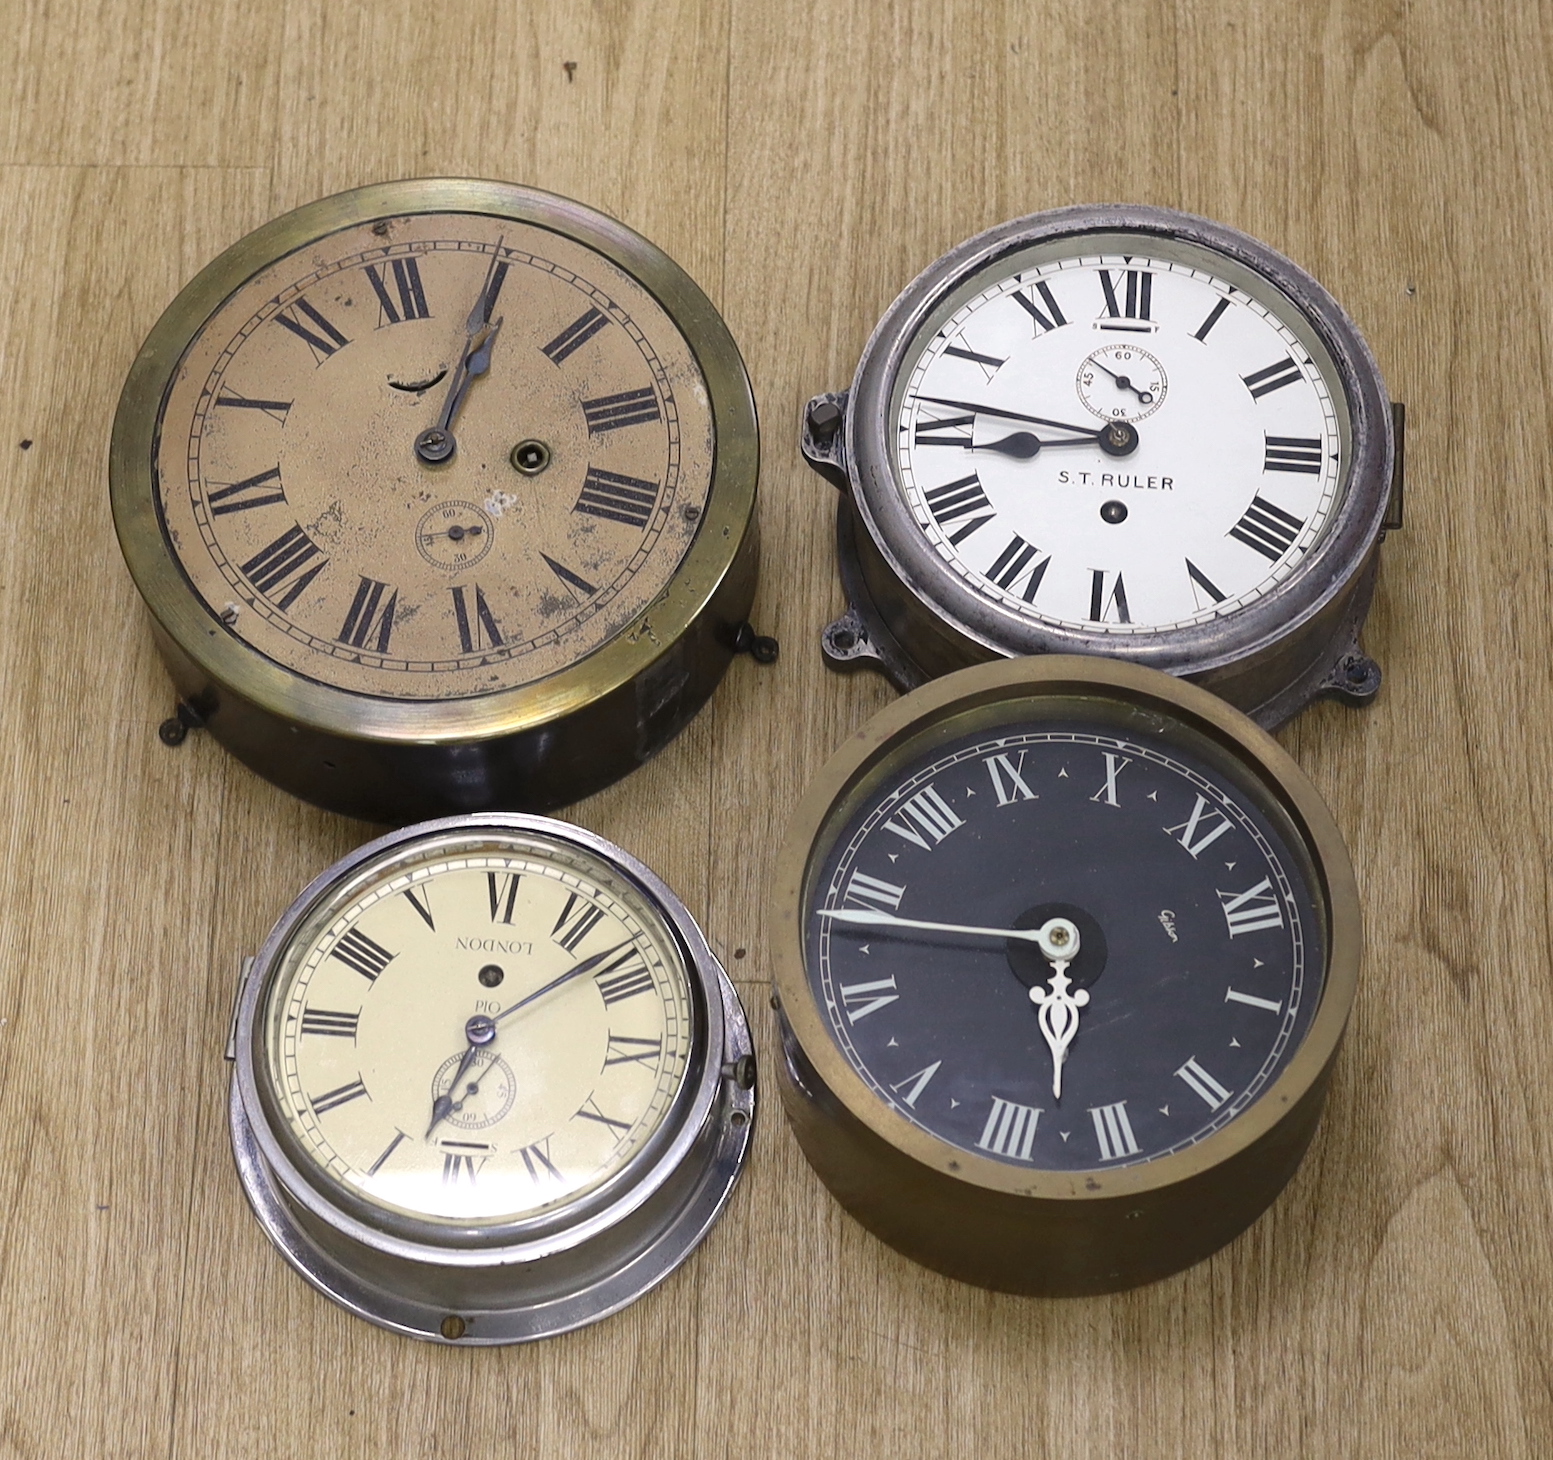 Four bulkhead timepieces